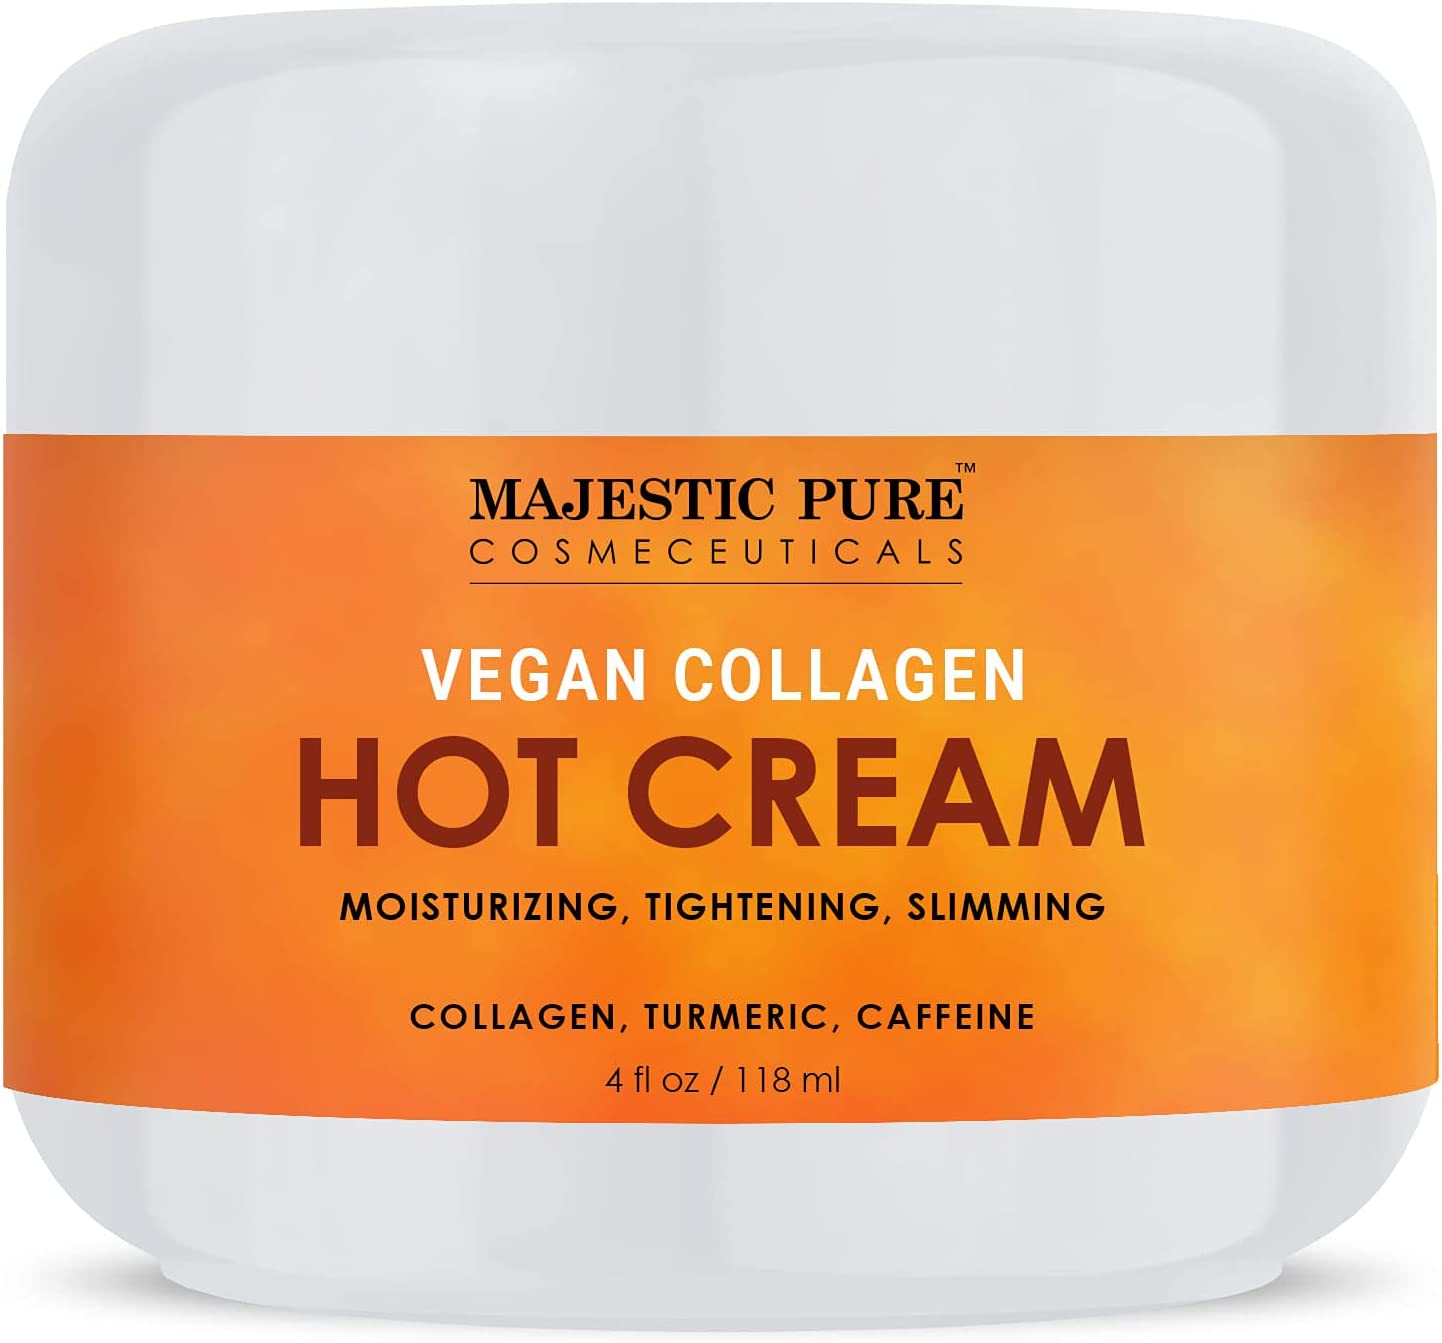 MAJESTIC PURE Hot Cream - with Caffeine, Vegan Collagen & Turmeric